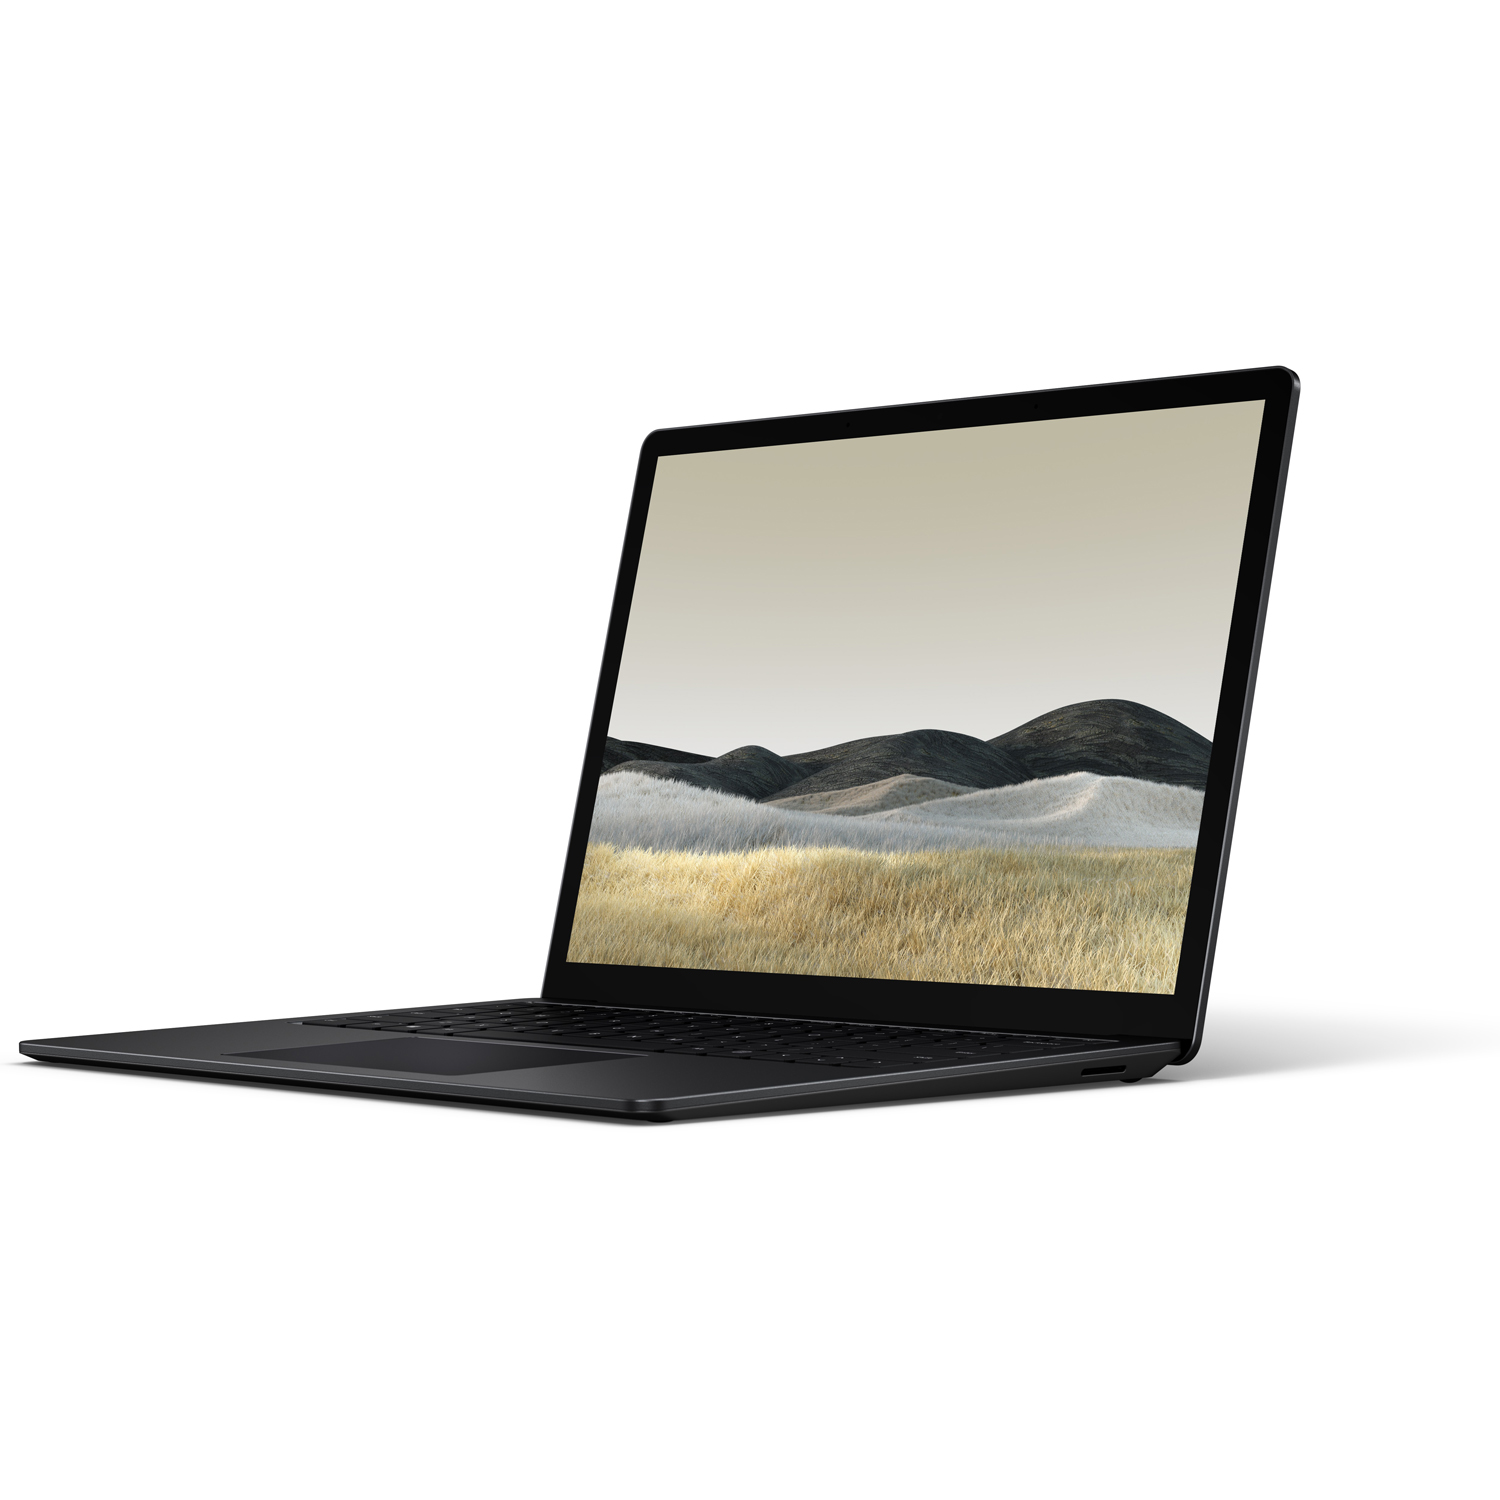 Microsoft VGS-00022 Surface Laptop 3 13.5 Touch Intel i7-1065G7 16GB 512GB, Black